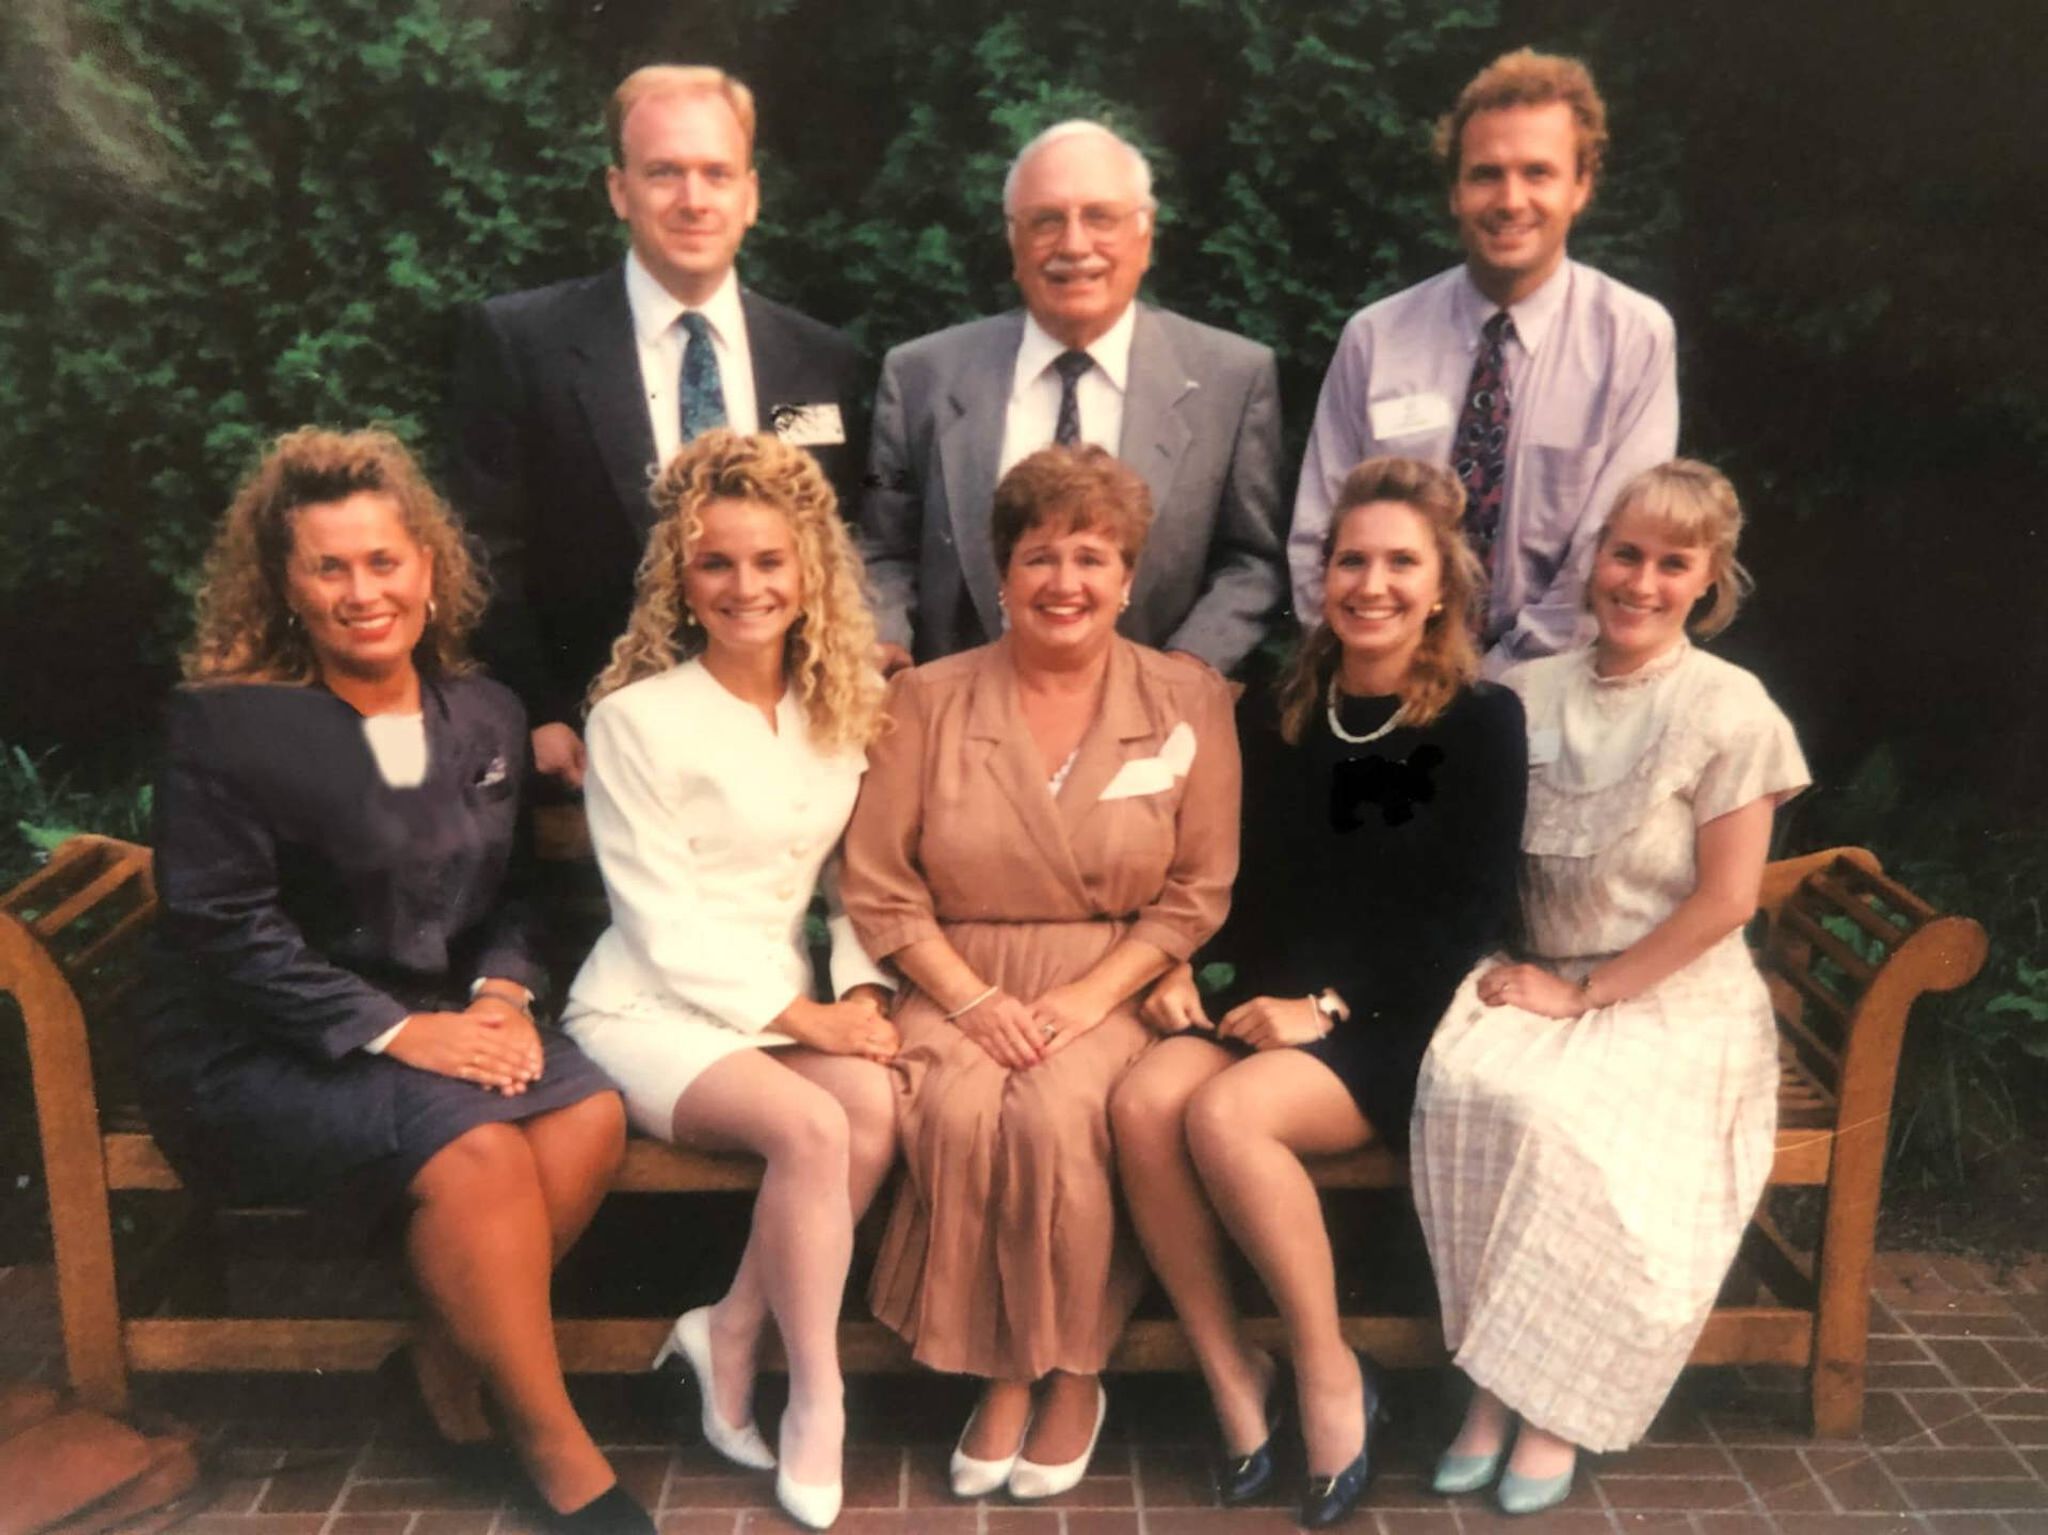 Lahammer family at Minnesota Governor's Residence, 1994.